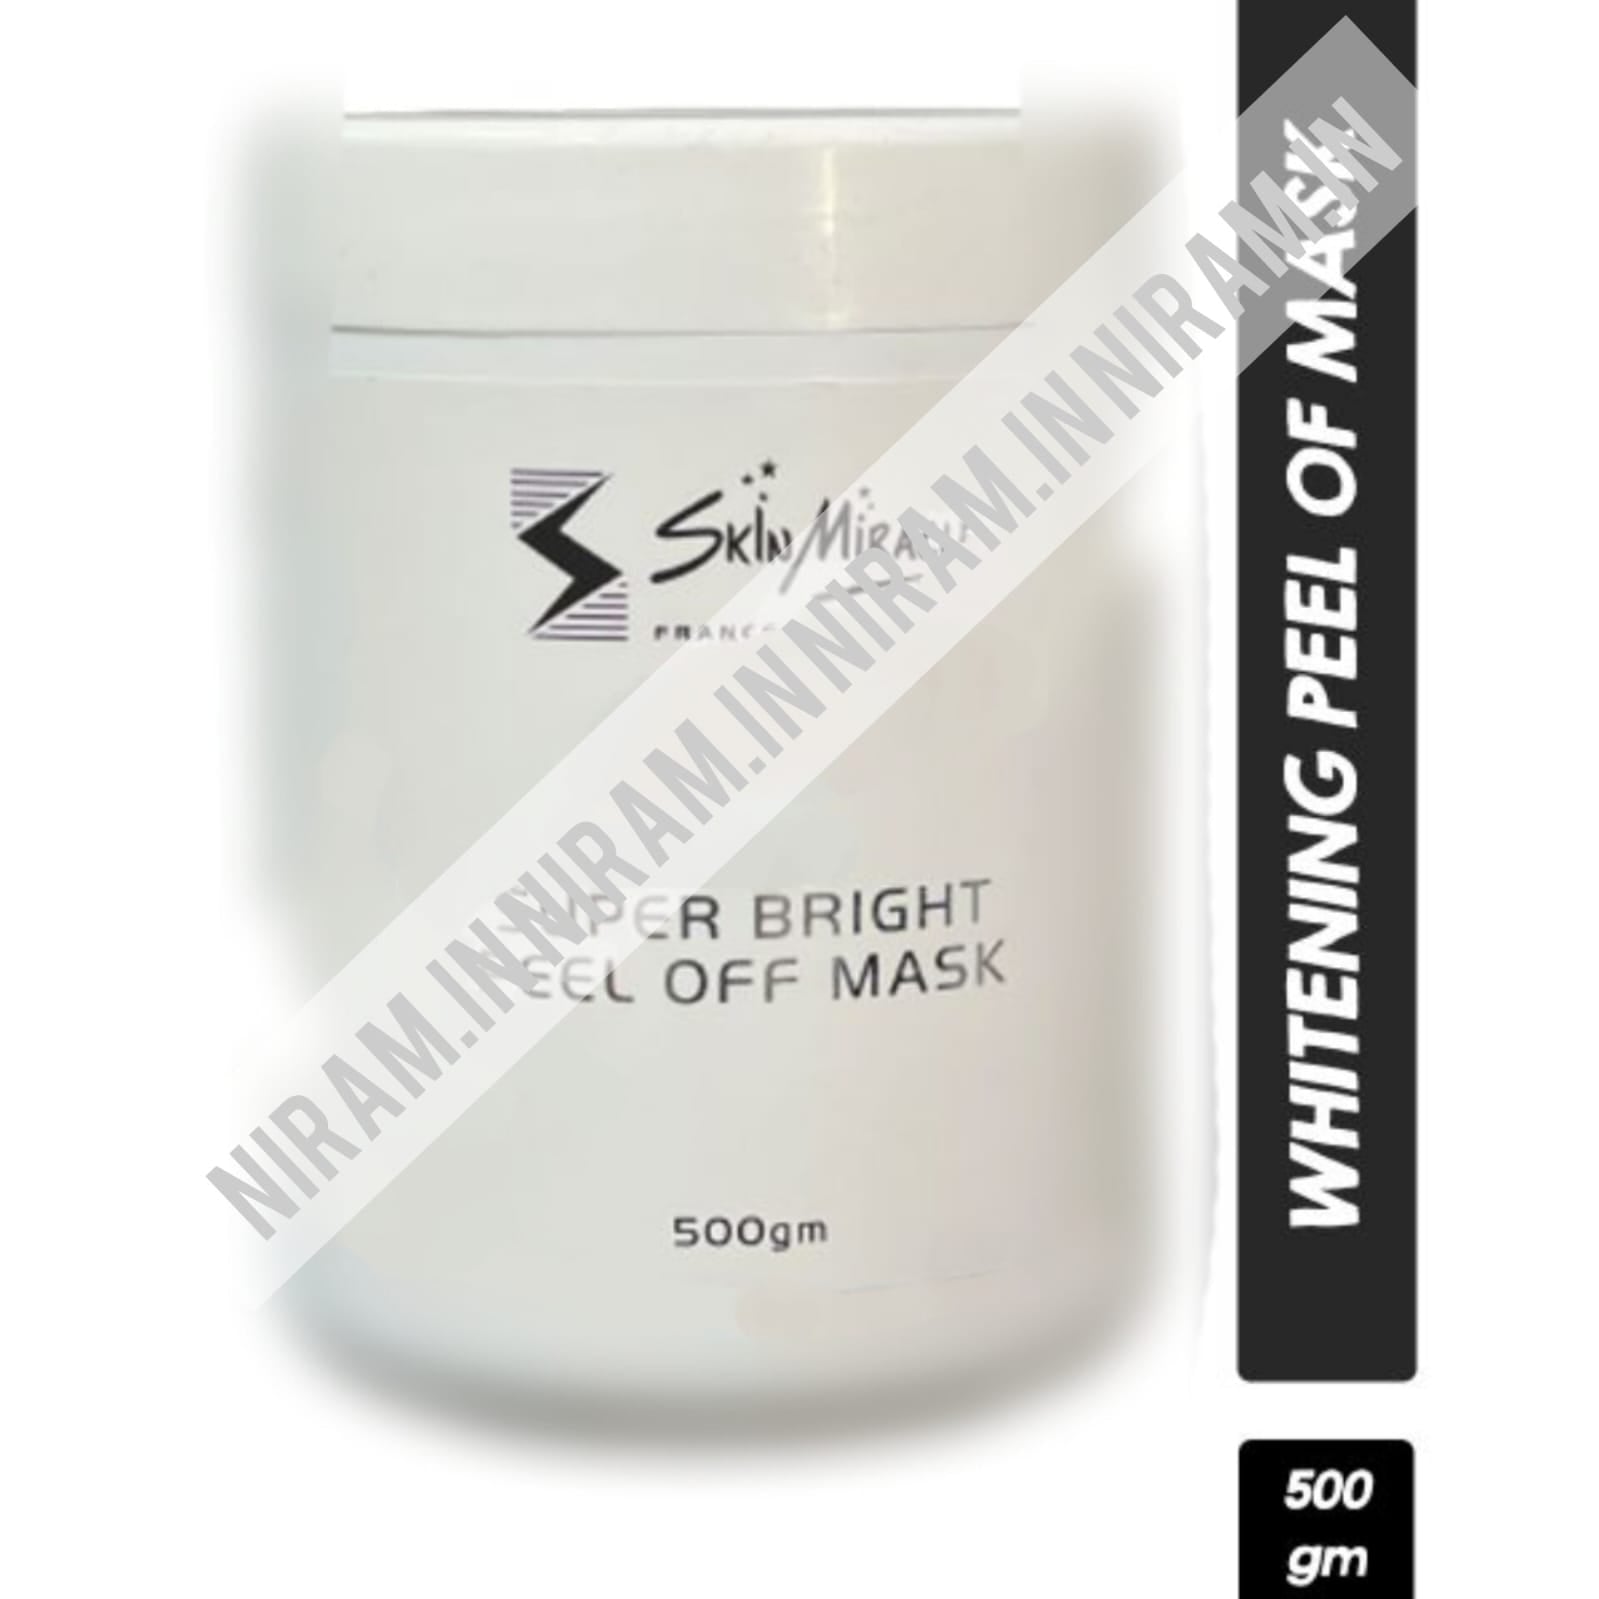 Skin Miracle Super Bright Peel Of Mask (500gm)